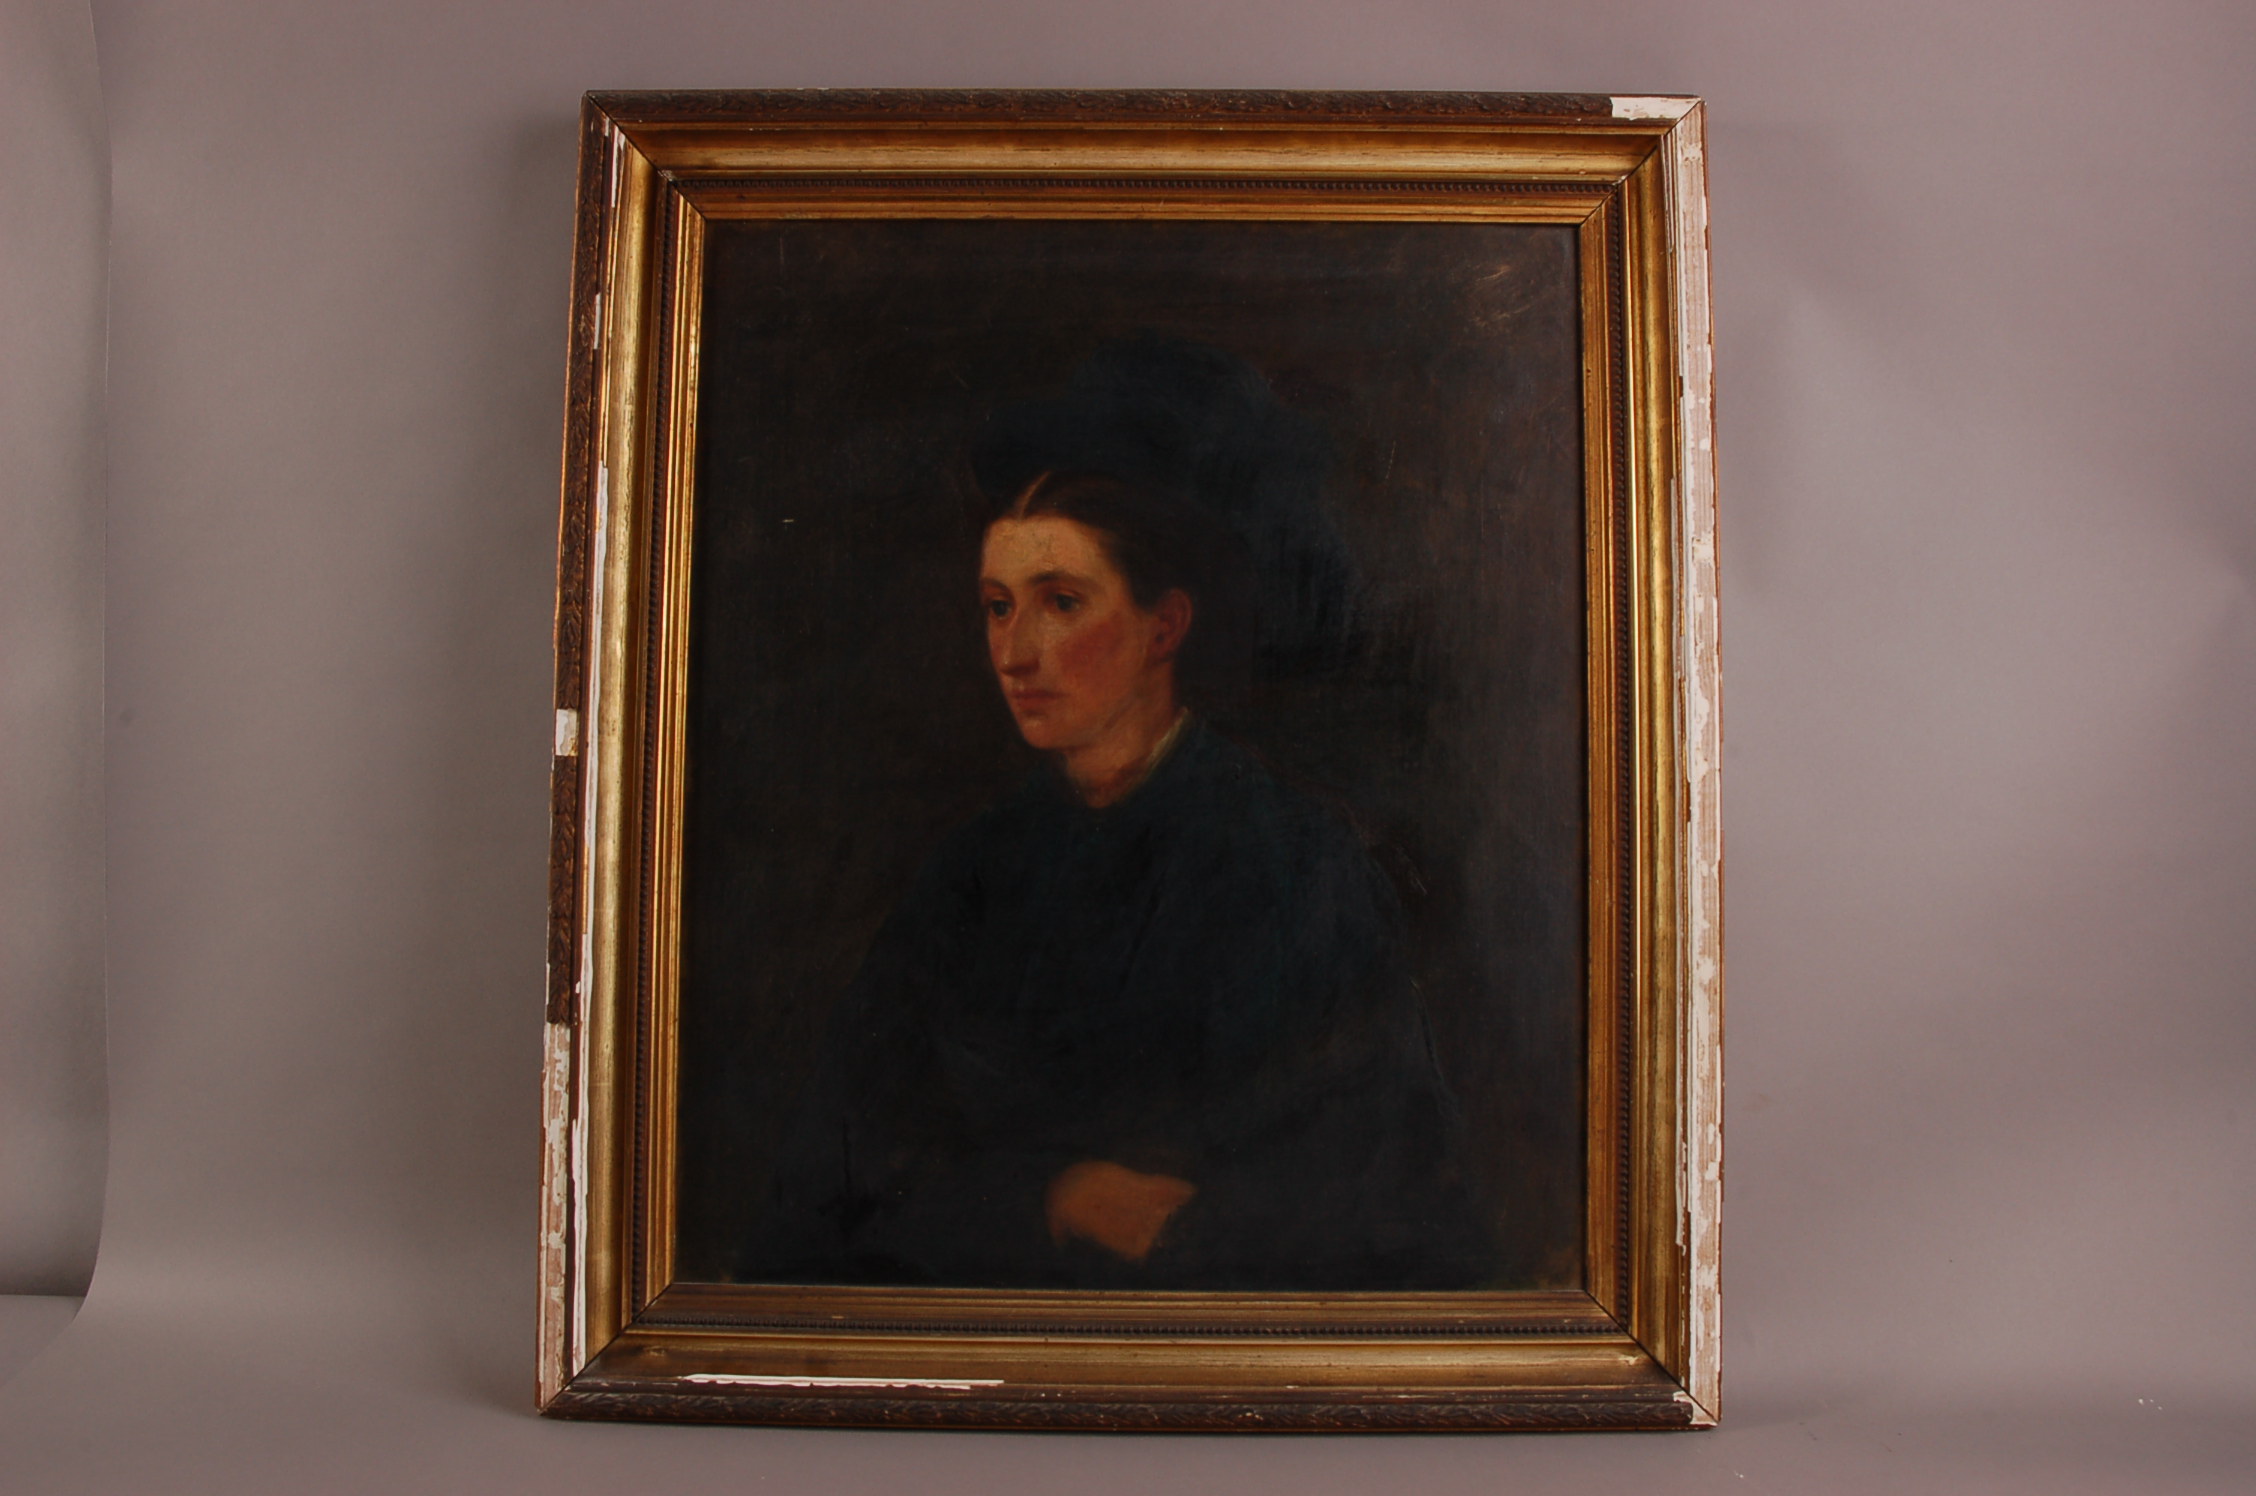 British School (18th/19th century), 59cm by 49cm, oil on canvas, Portrait of a Lady, framed, AF